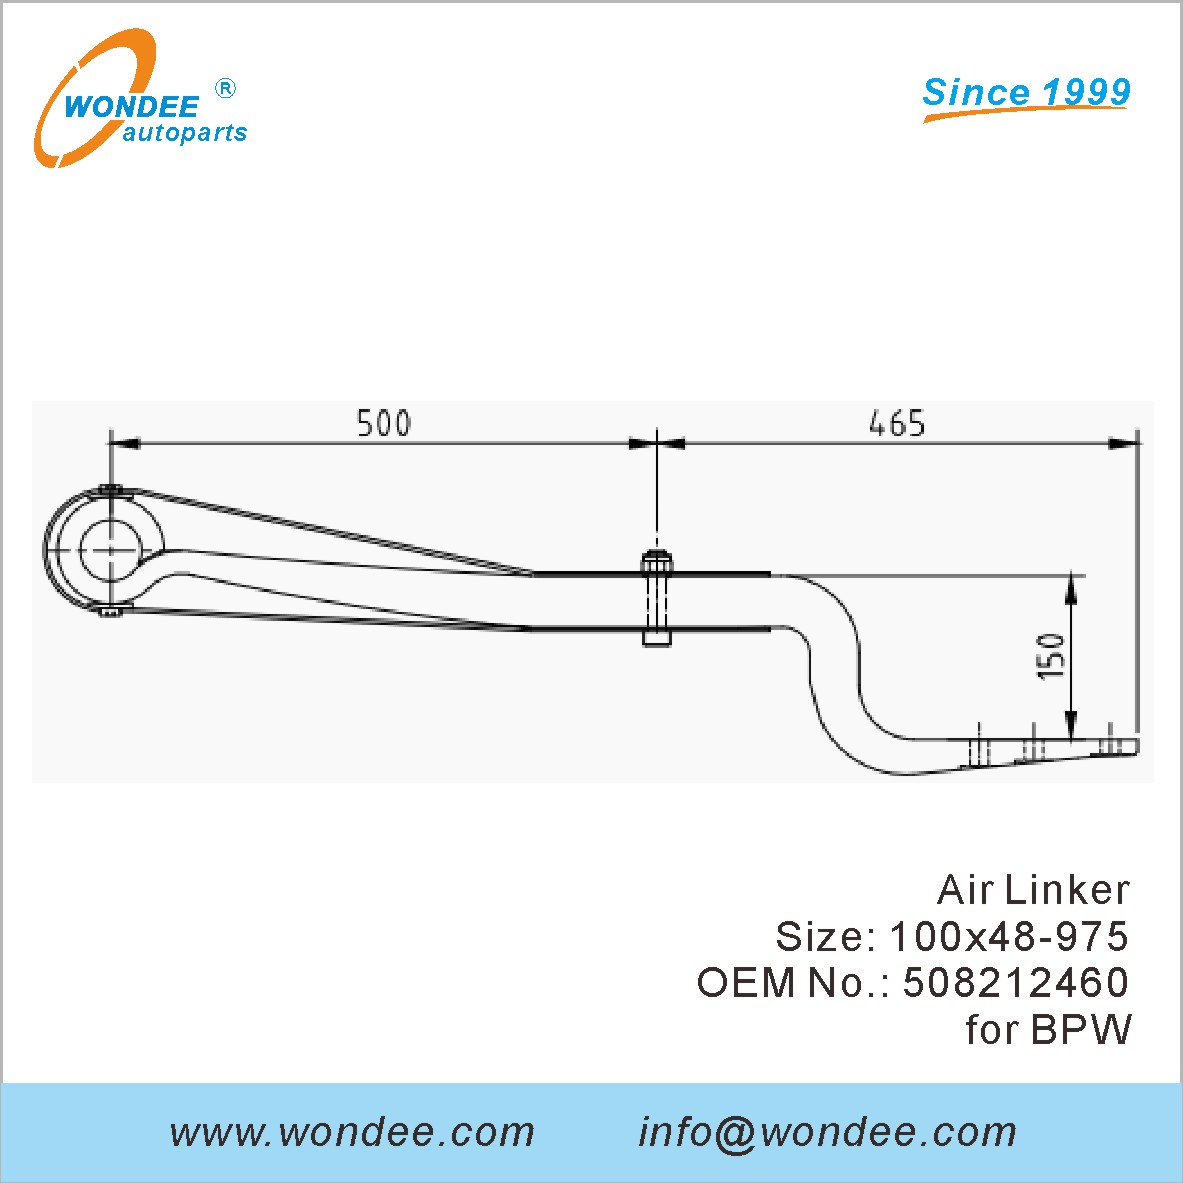 WONDEE Autoparts Air Linker OEM 508212460 for BPW